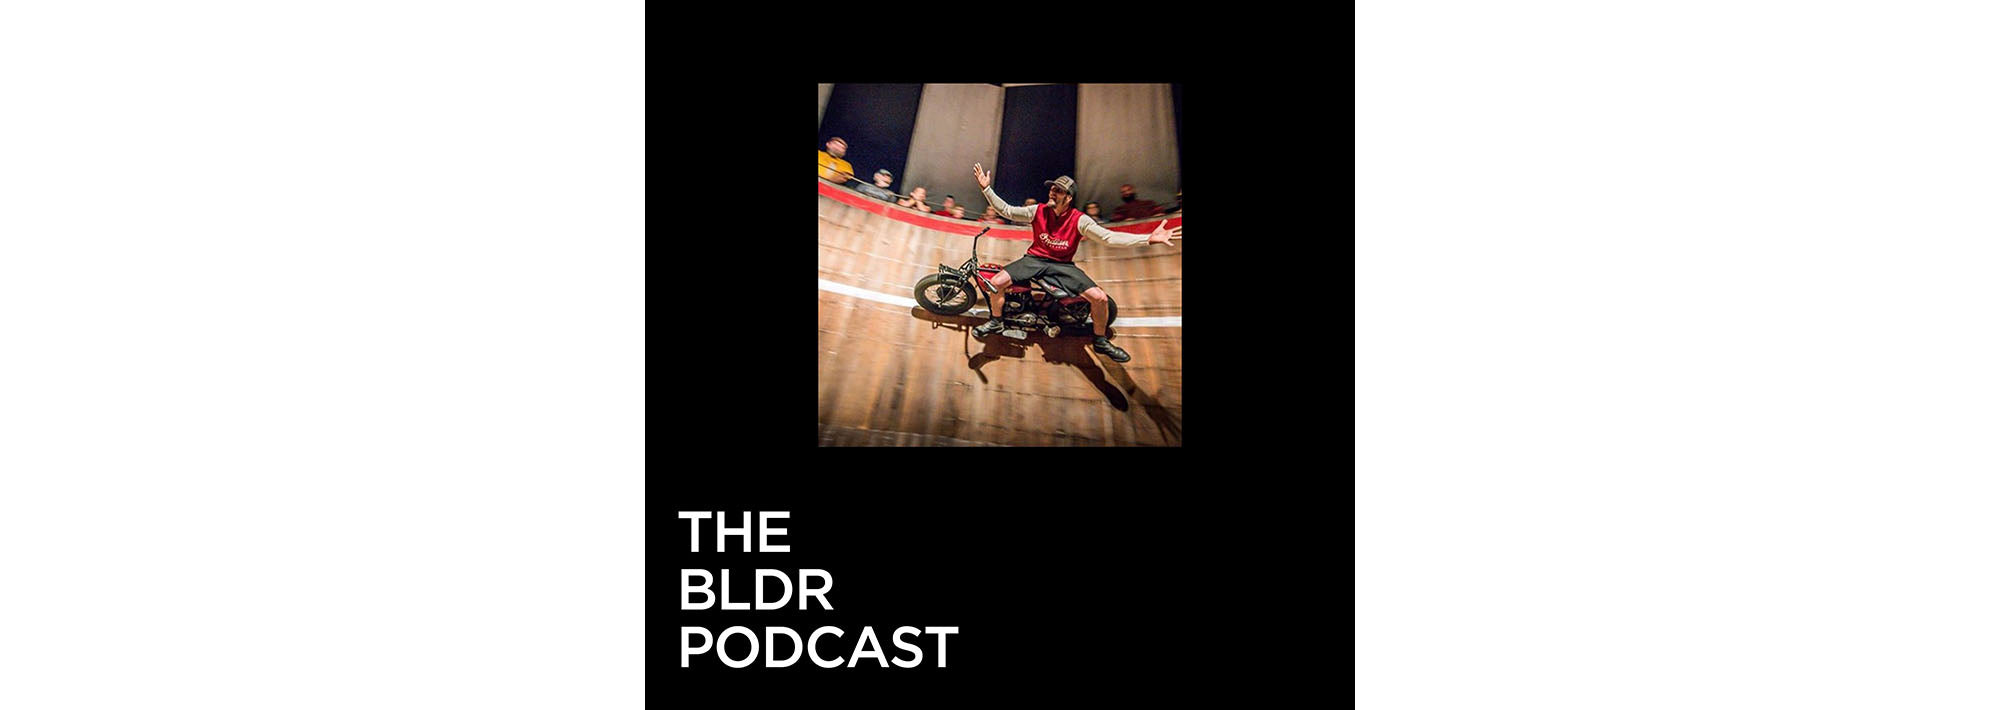 BLDR Podcast - Rhett Rotten "Racing on the Wall-o-Death"